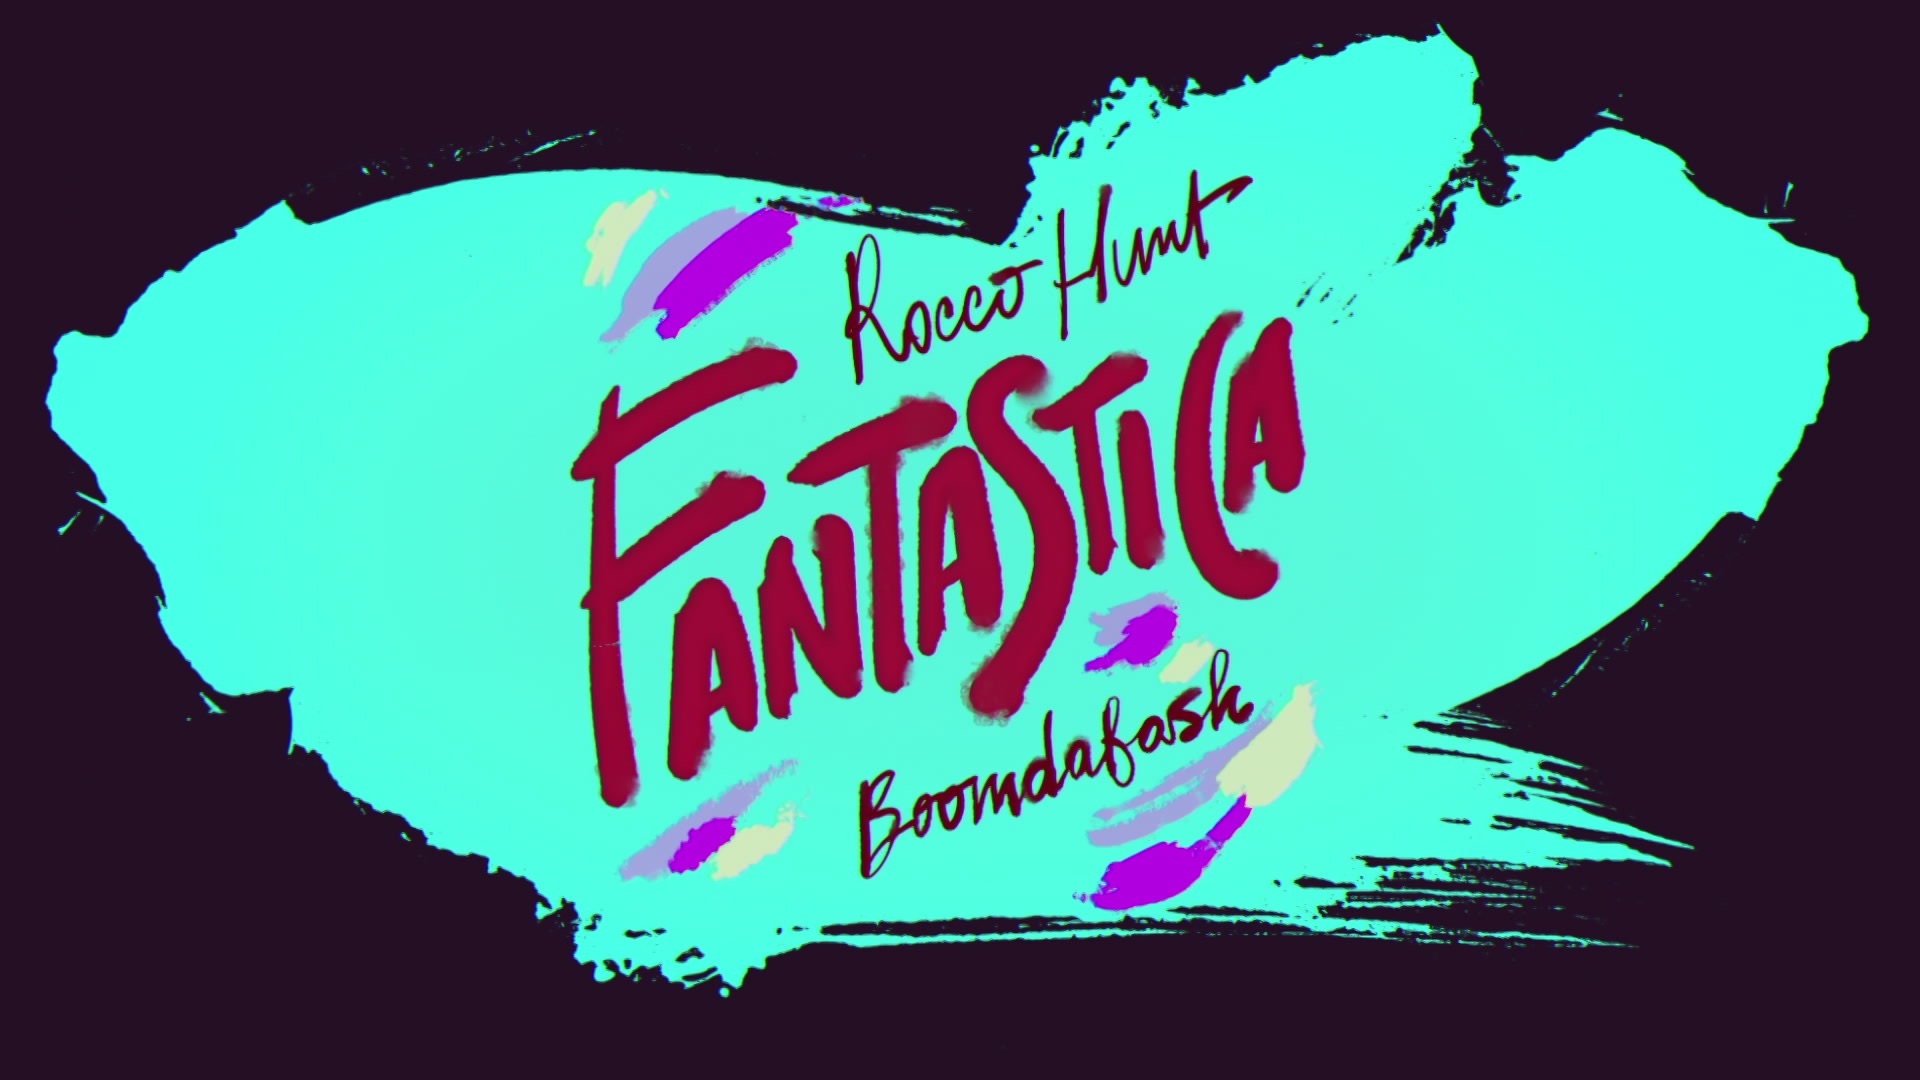 Fantastica (Lyric Video) by Rocco Hunt & Boomdabash on Apple Music